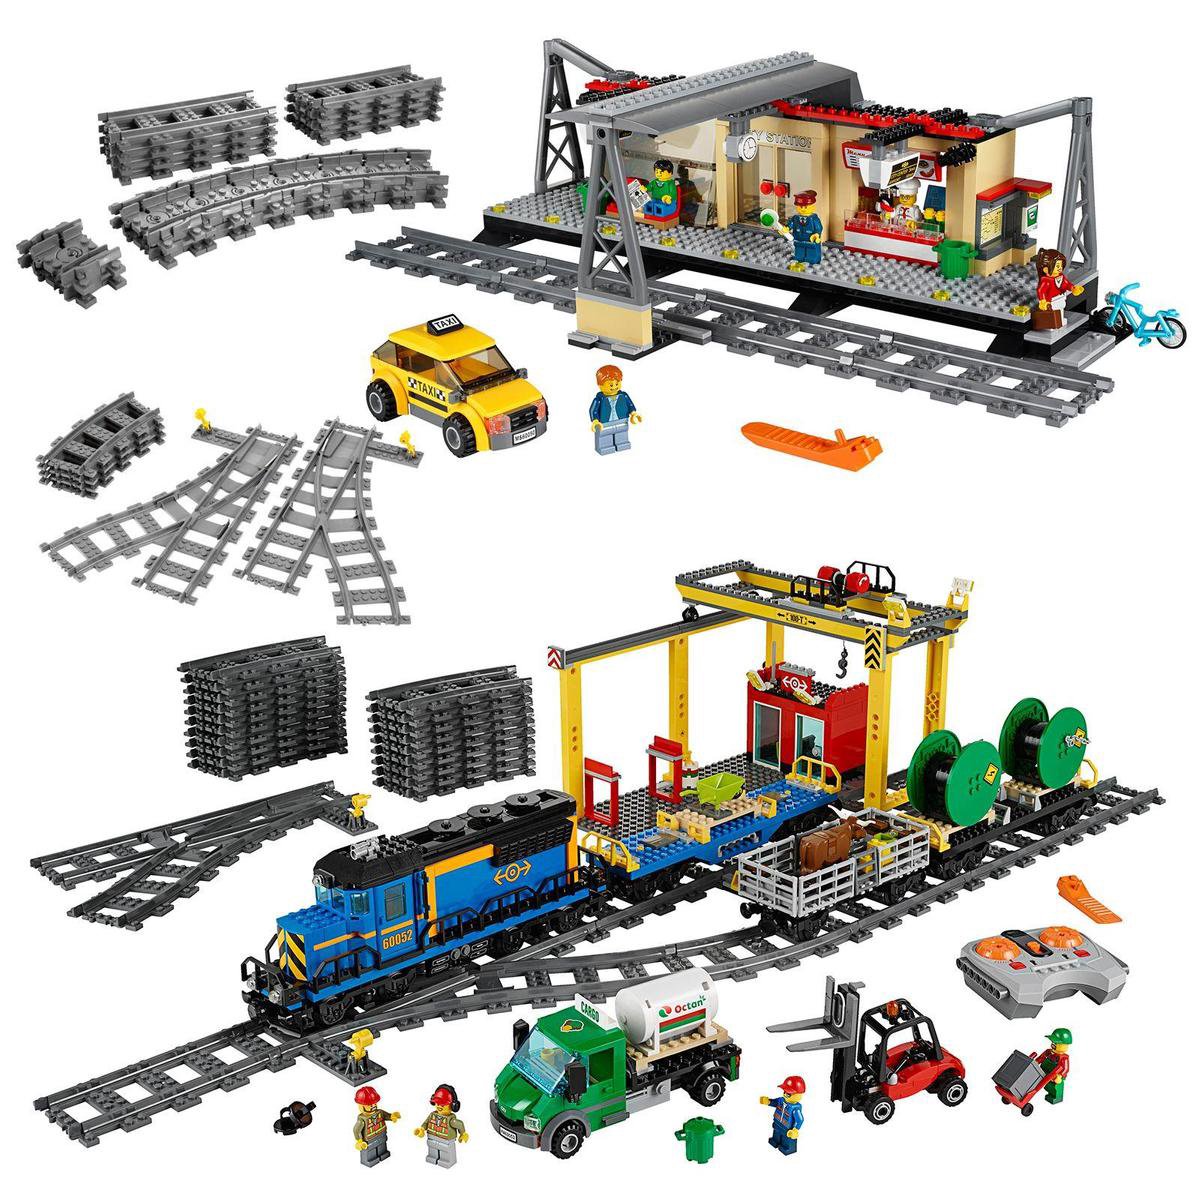 LEGO City Treinen Super Pack 4in1 - 66493 | bol.com